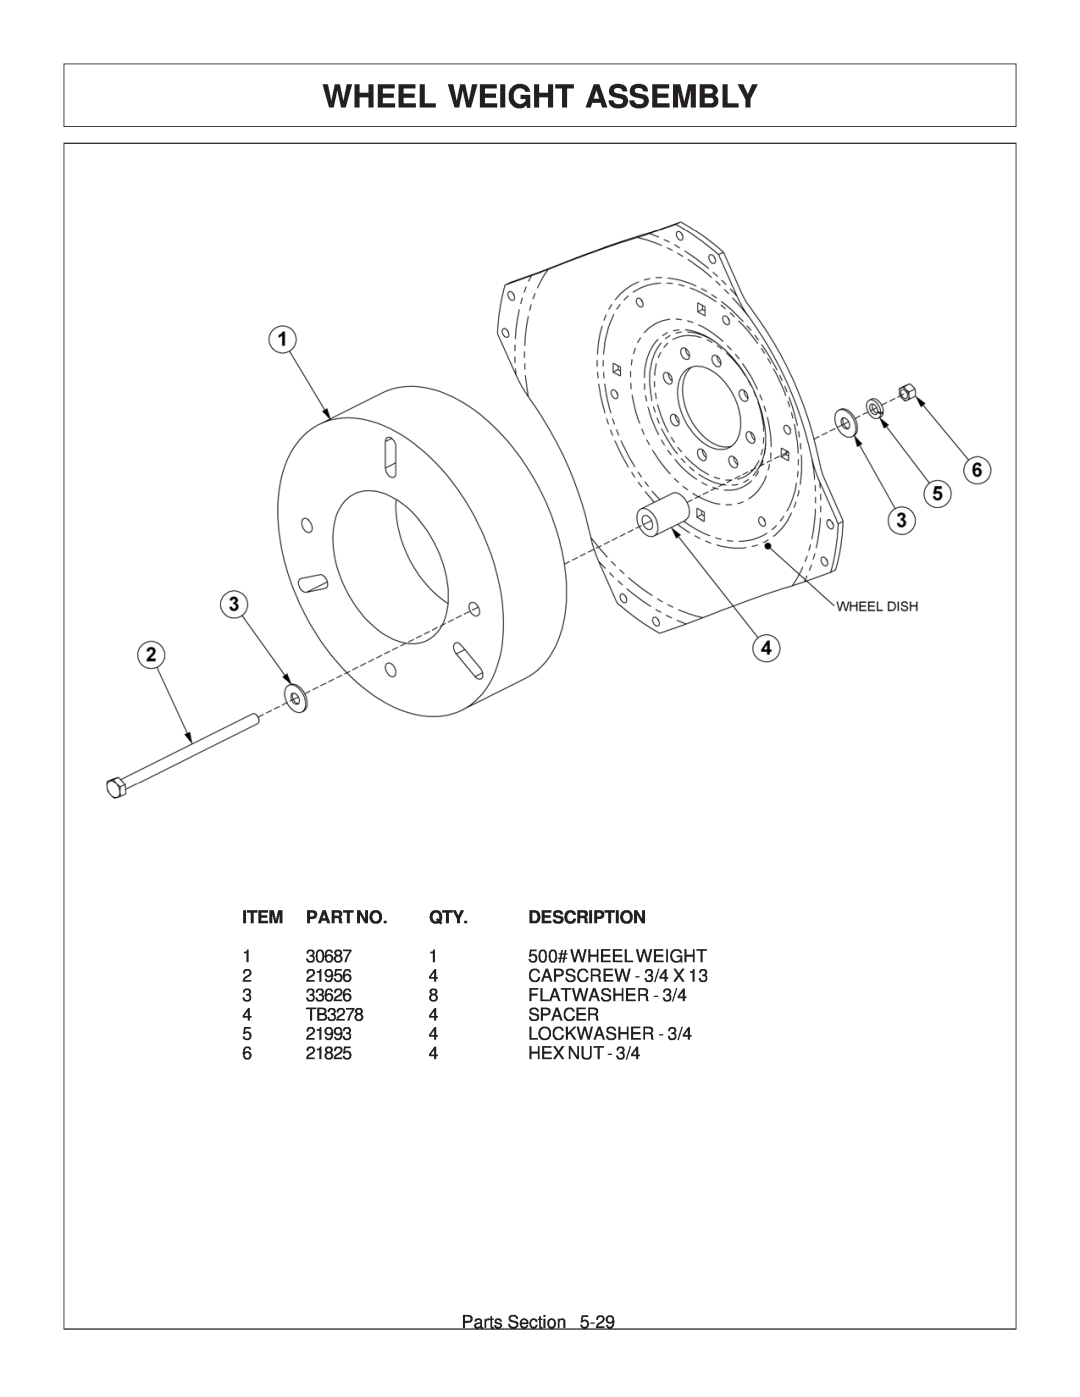 Tiger Products Co., Ltd JD 5083E, JD 5101E, JD 5093E manual Wheel Weight Assembly, Description 